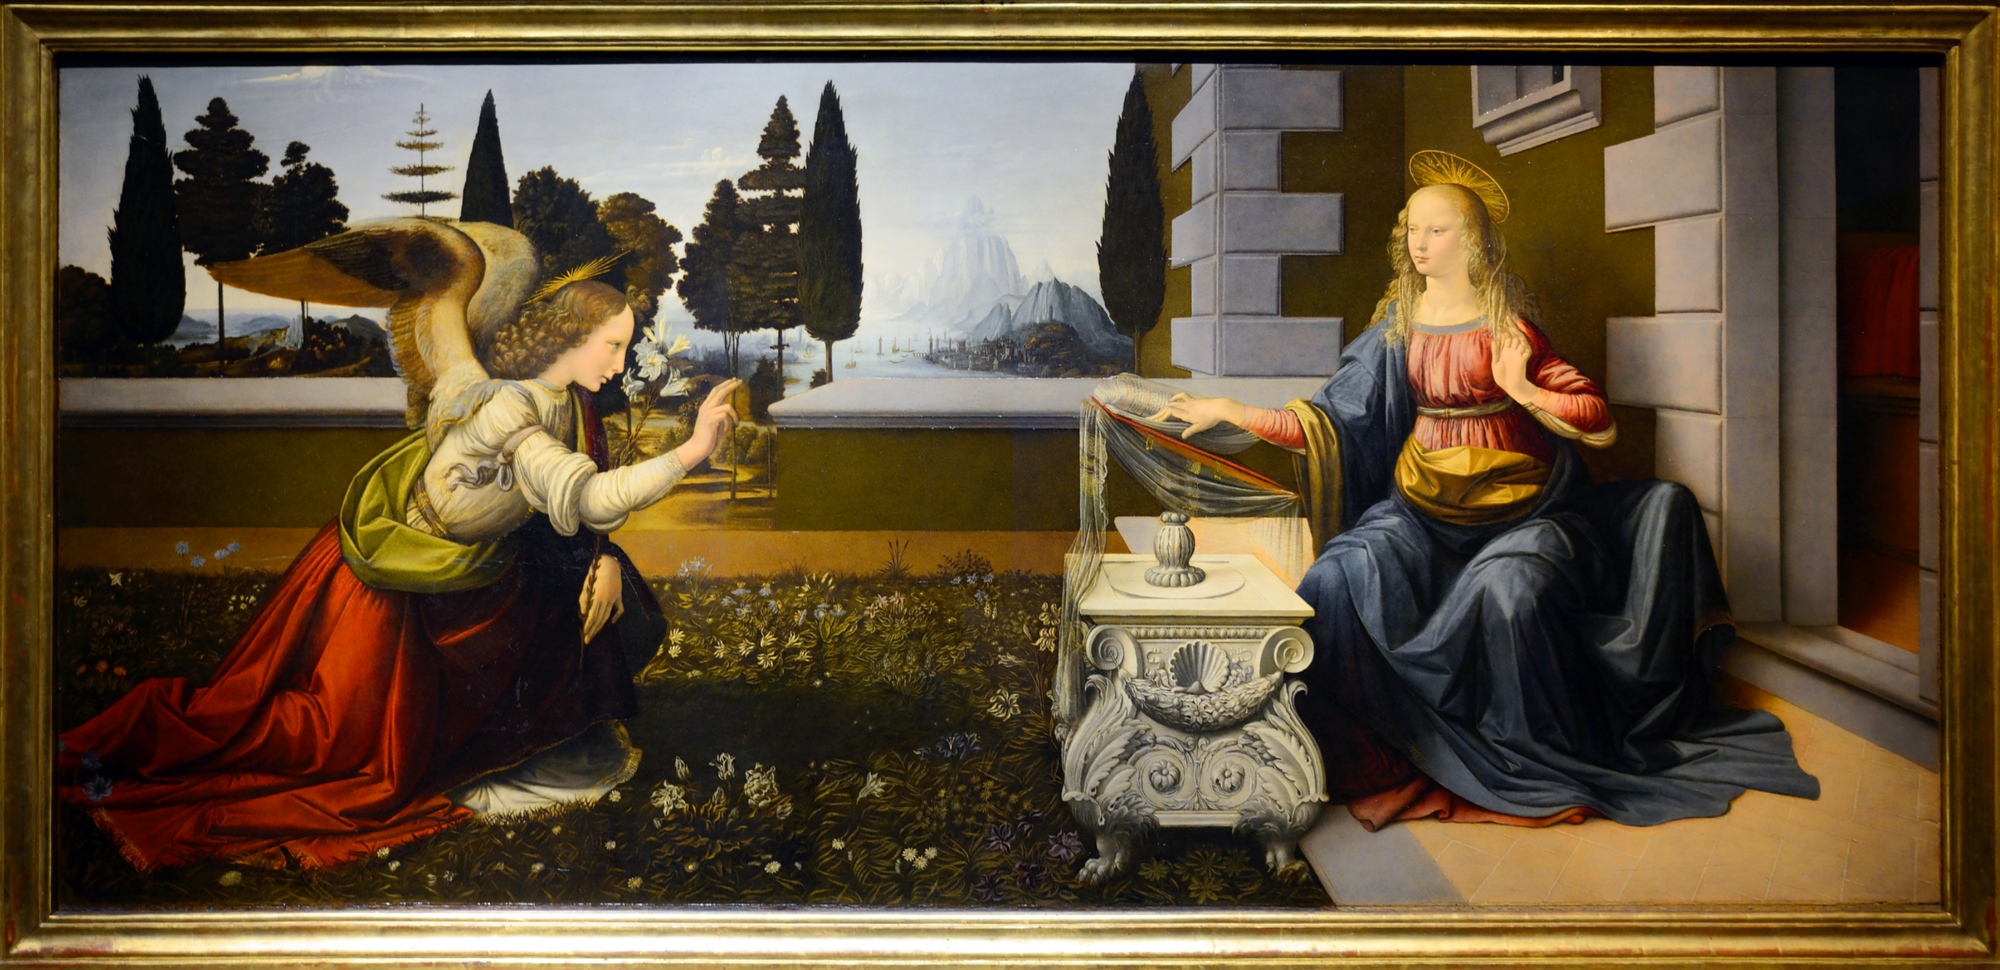 The Annunciation by Leonardo da Vinci